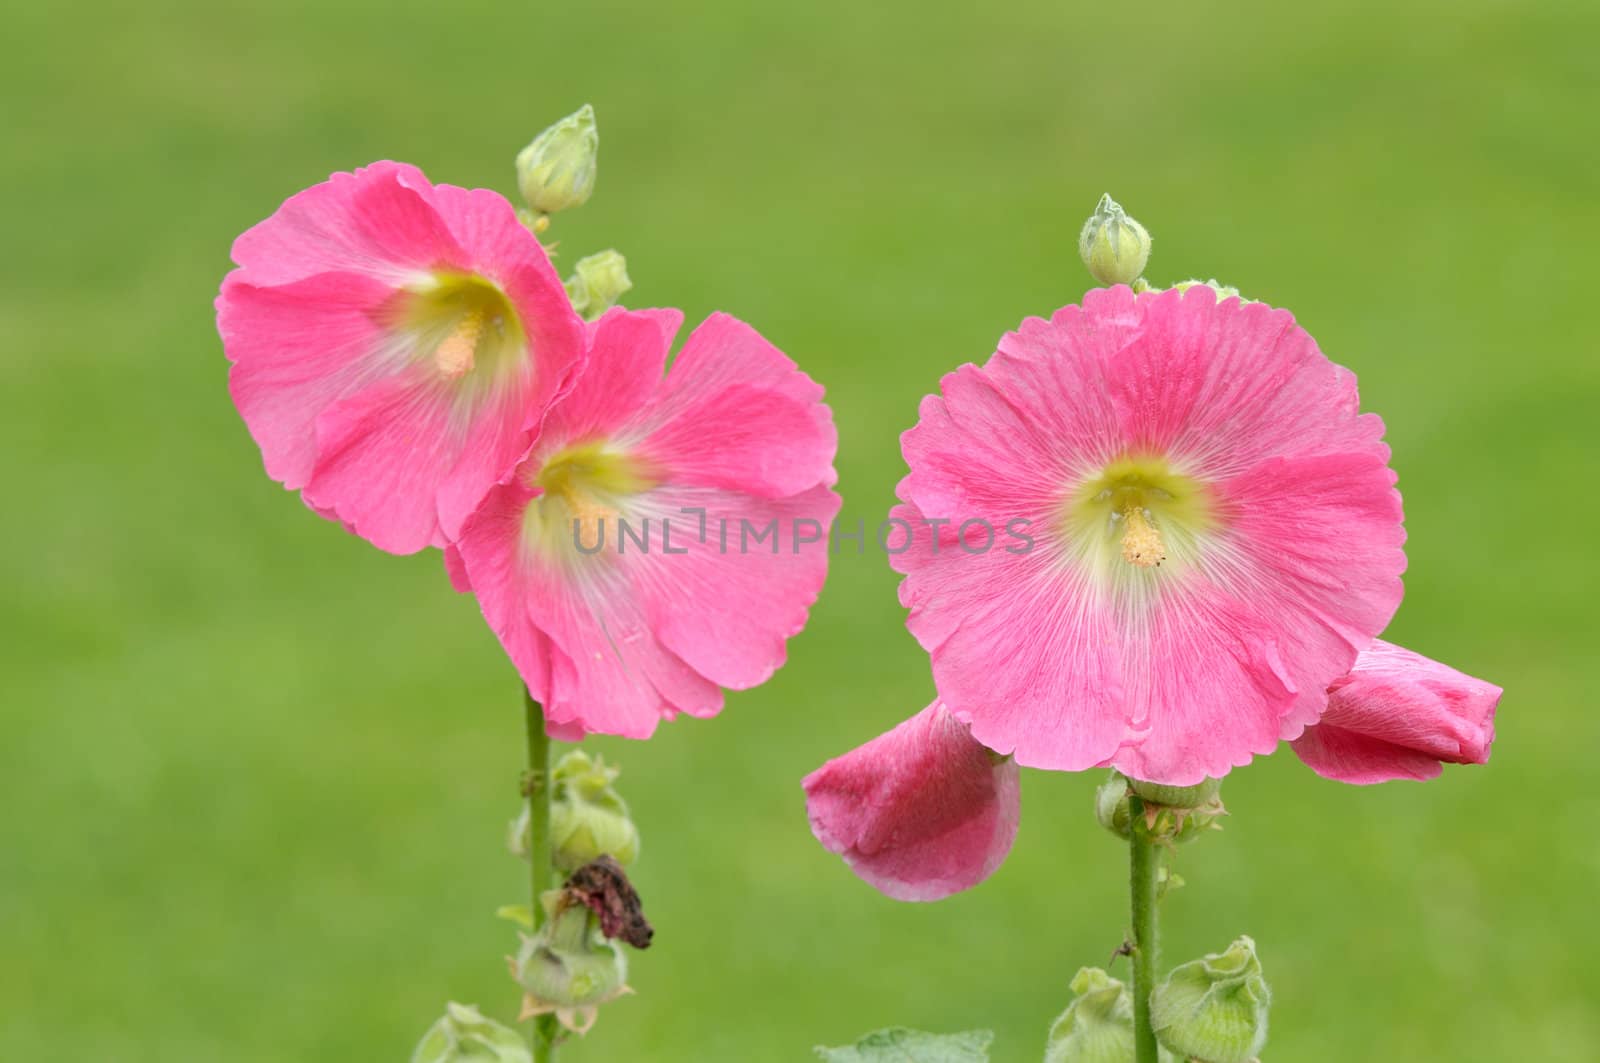 Pink Hollyhocks on grass background - Focus on right flower